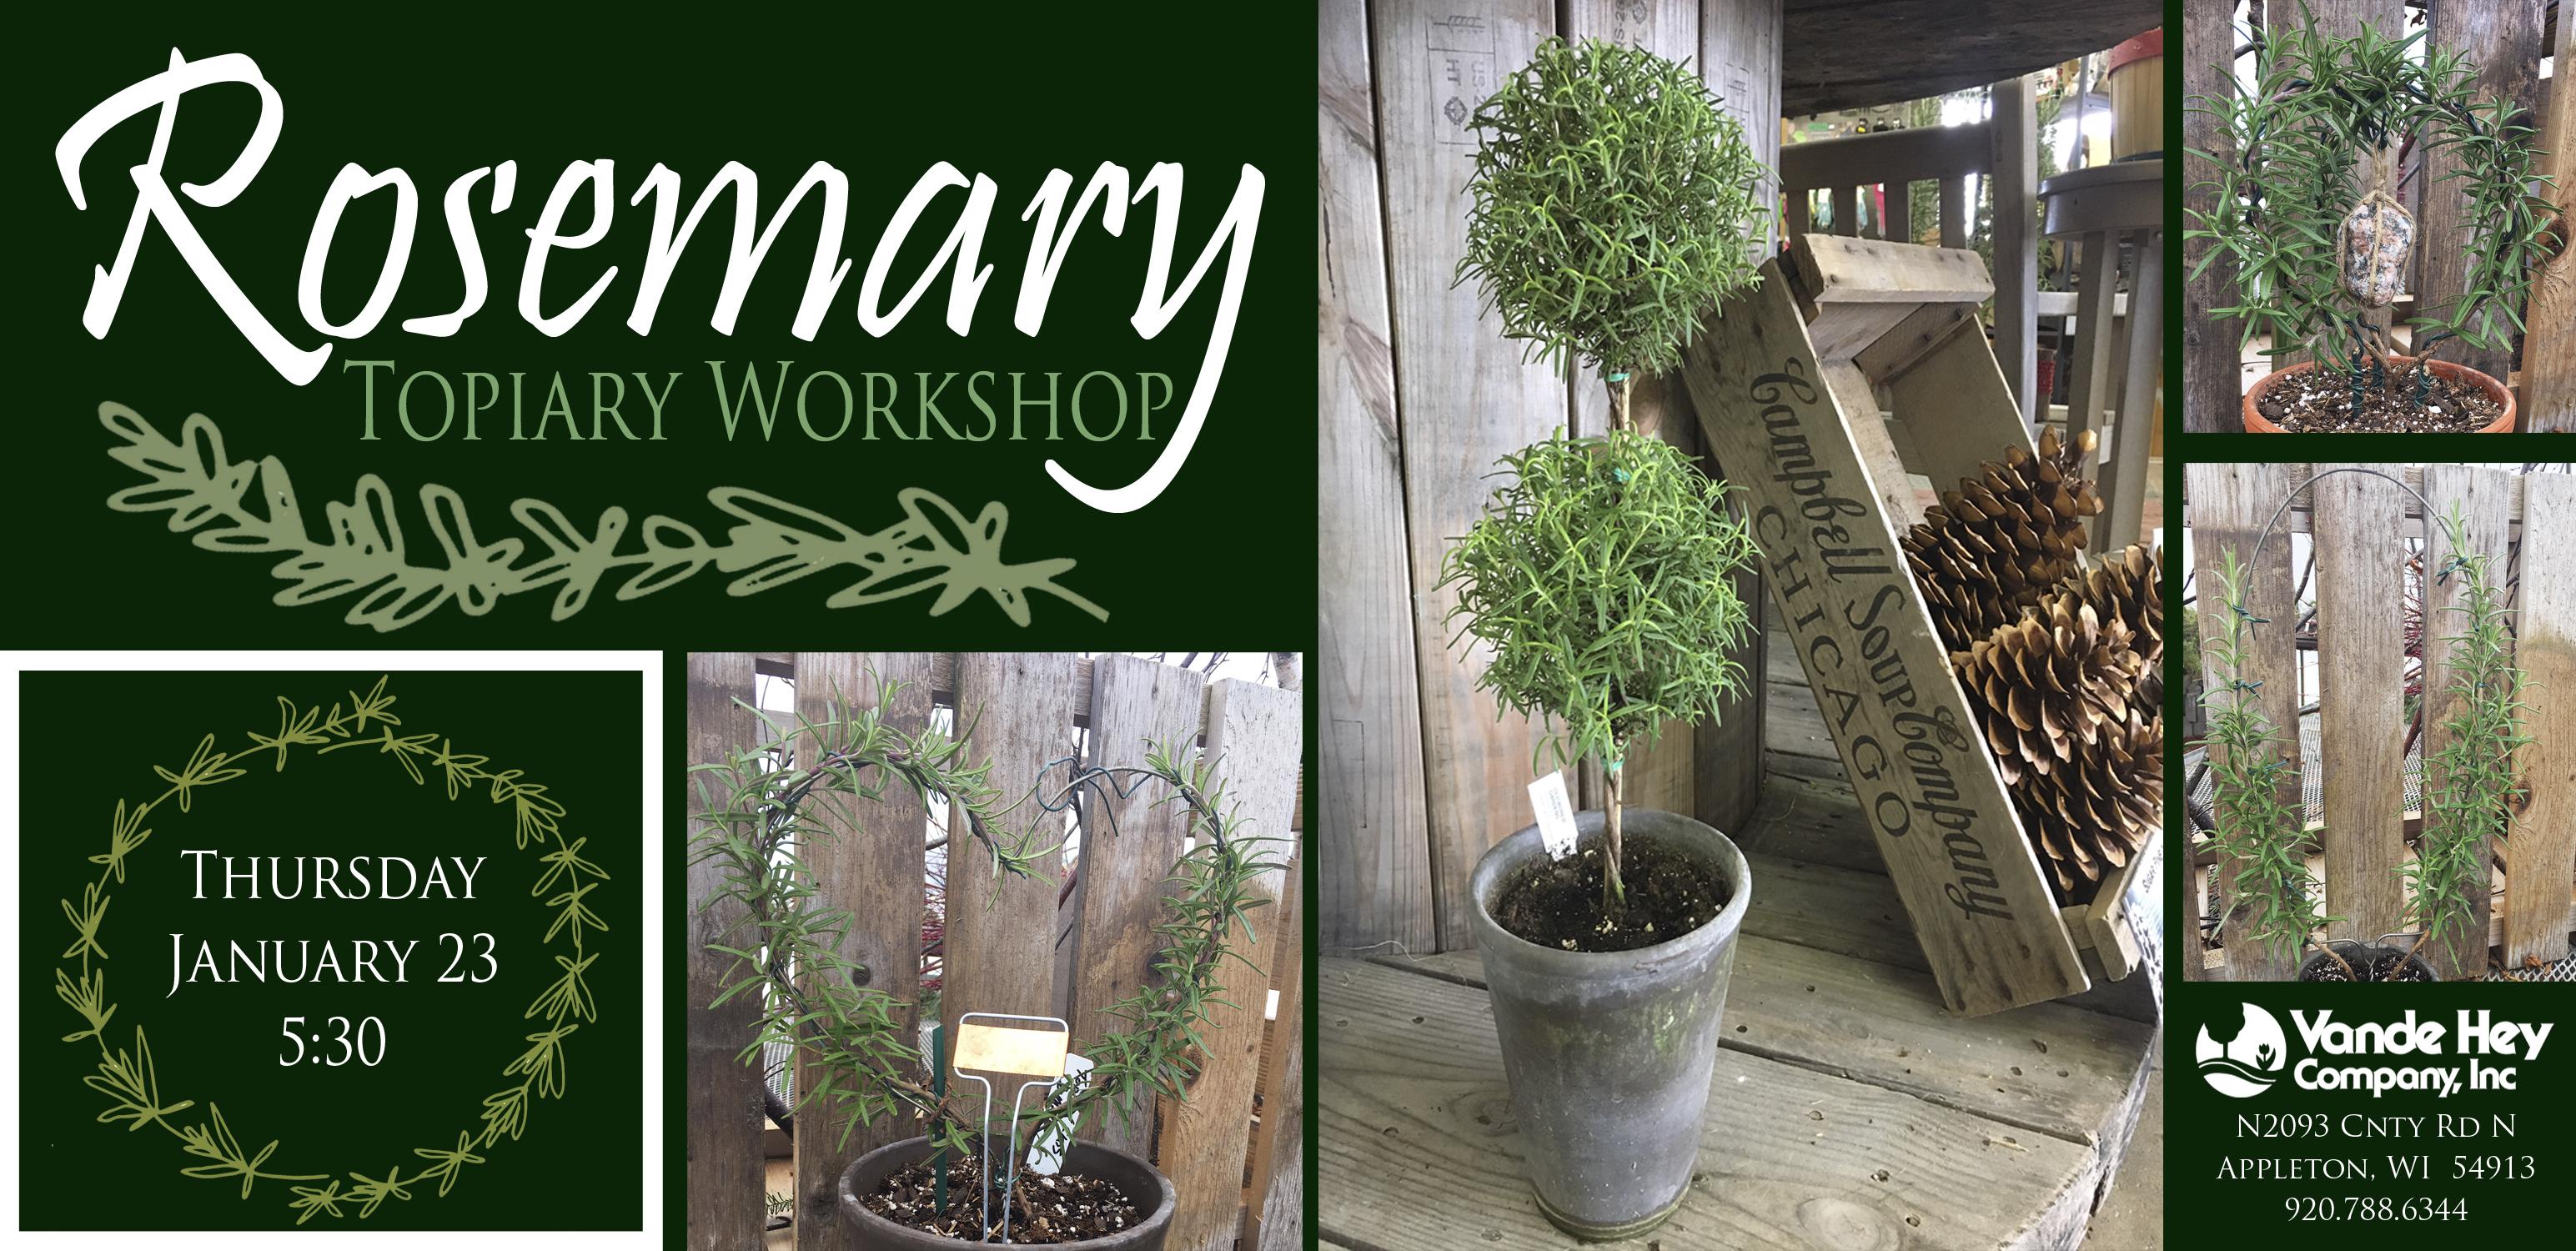 Rosemary Topiary Workshop